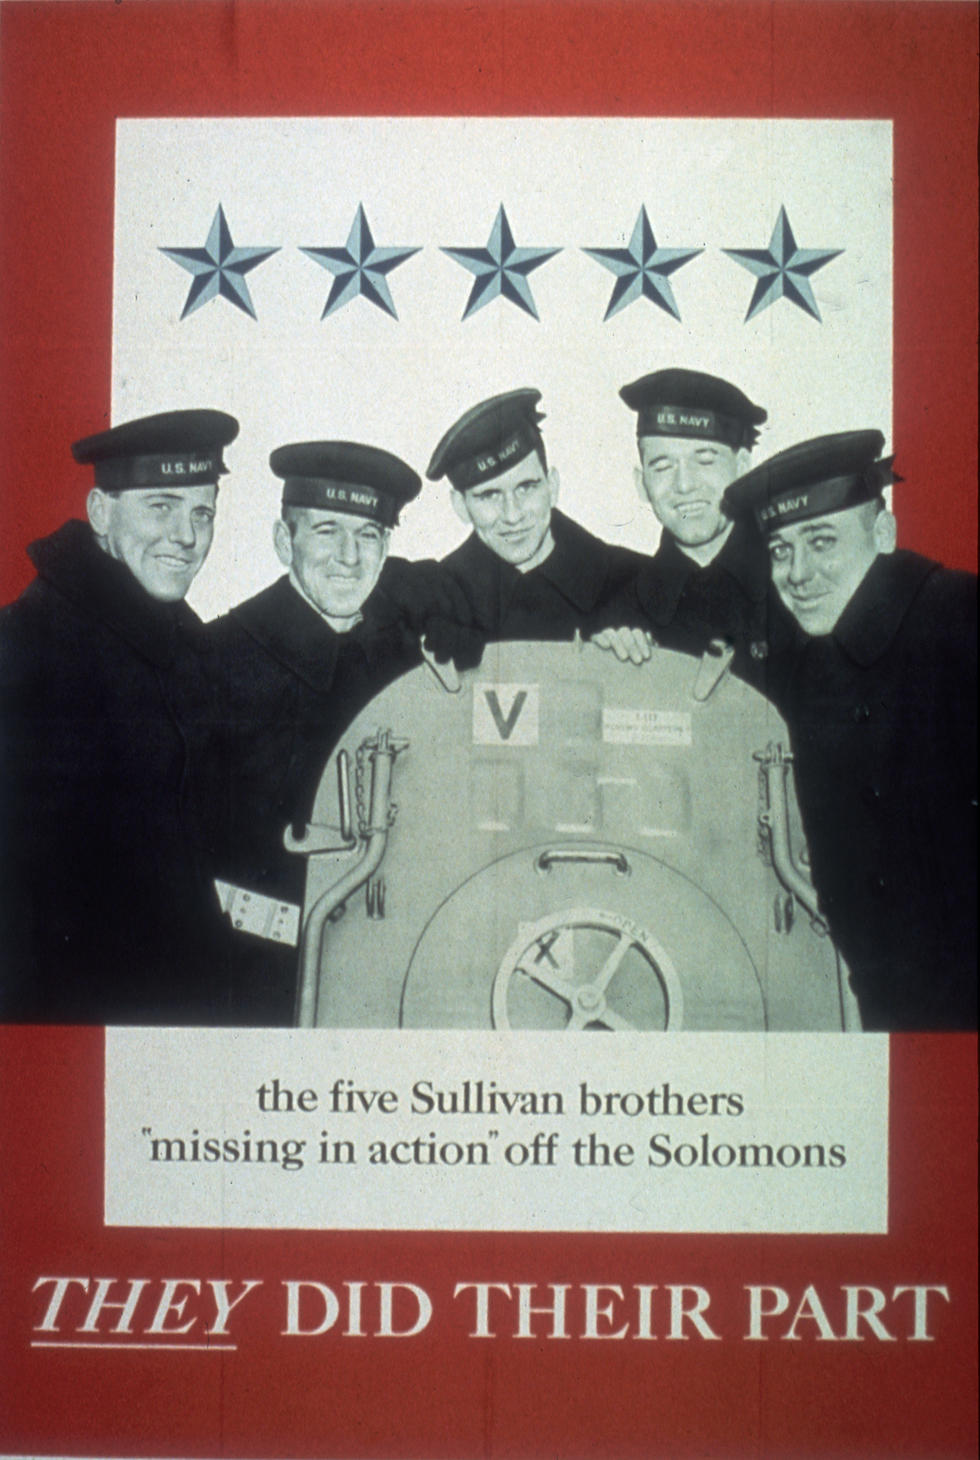 Nov. 13, 1942 Waterloo’s 5 Sullivan Brothers Met Their Fate On The USS Juneau